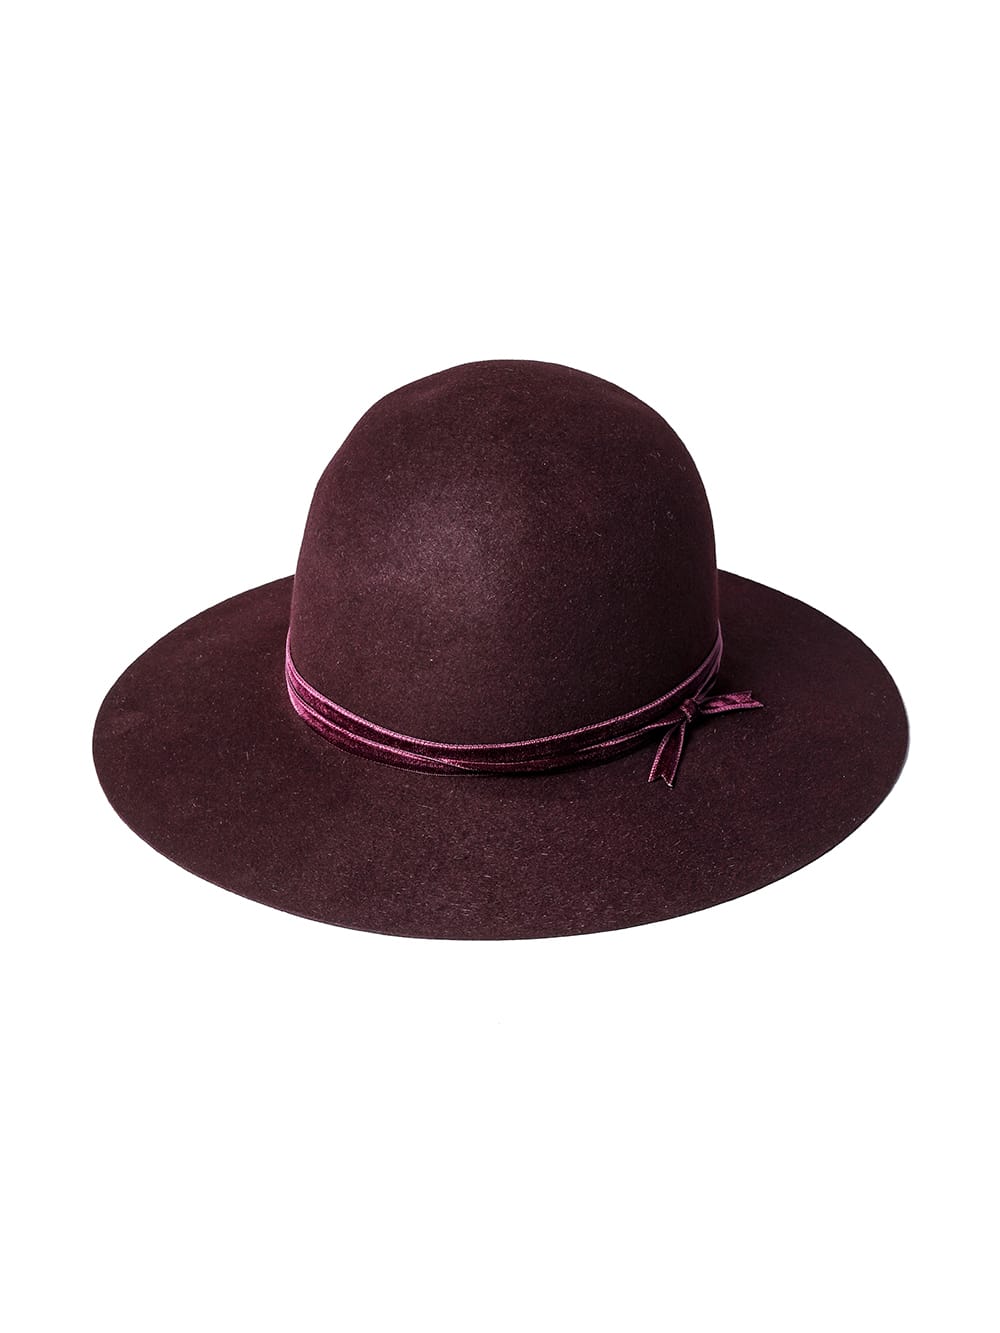 sa.0015AW23-bordeaux bowler hat./velvet ribbon. THE TWO OF